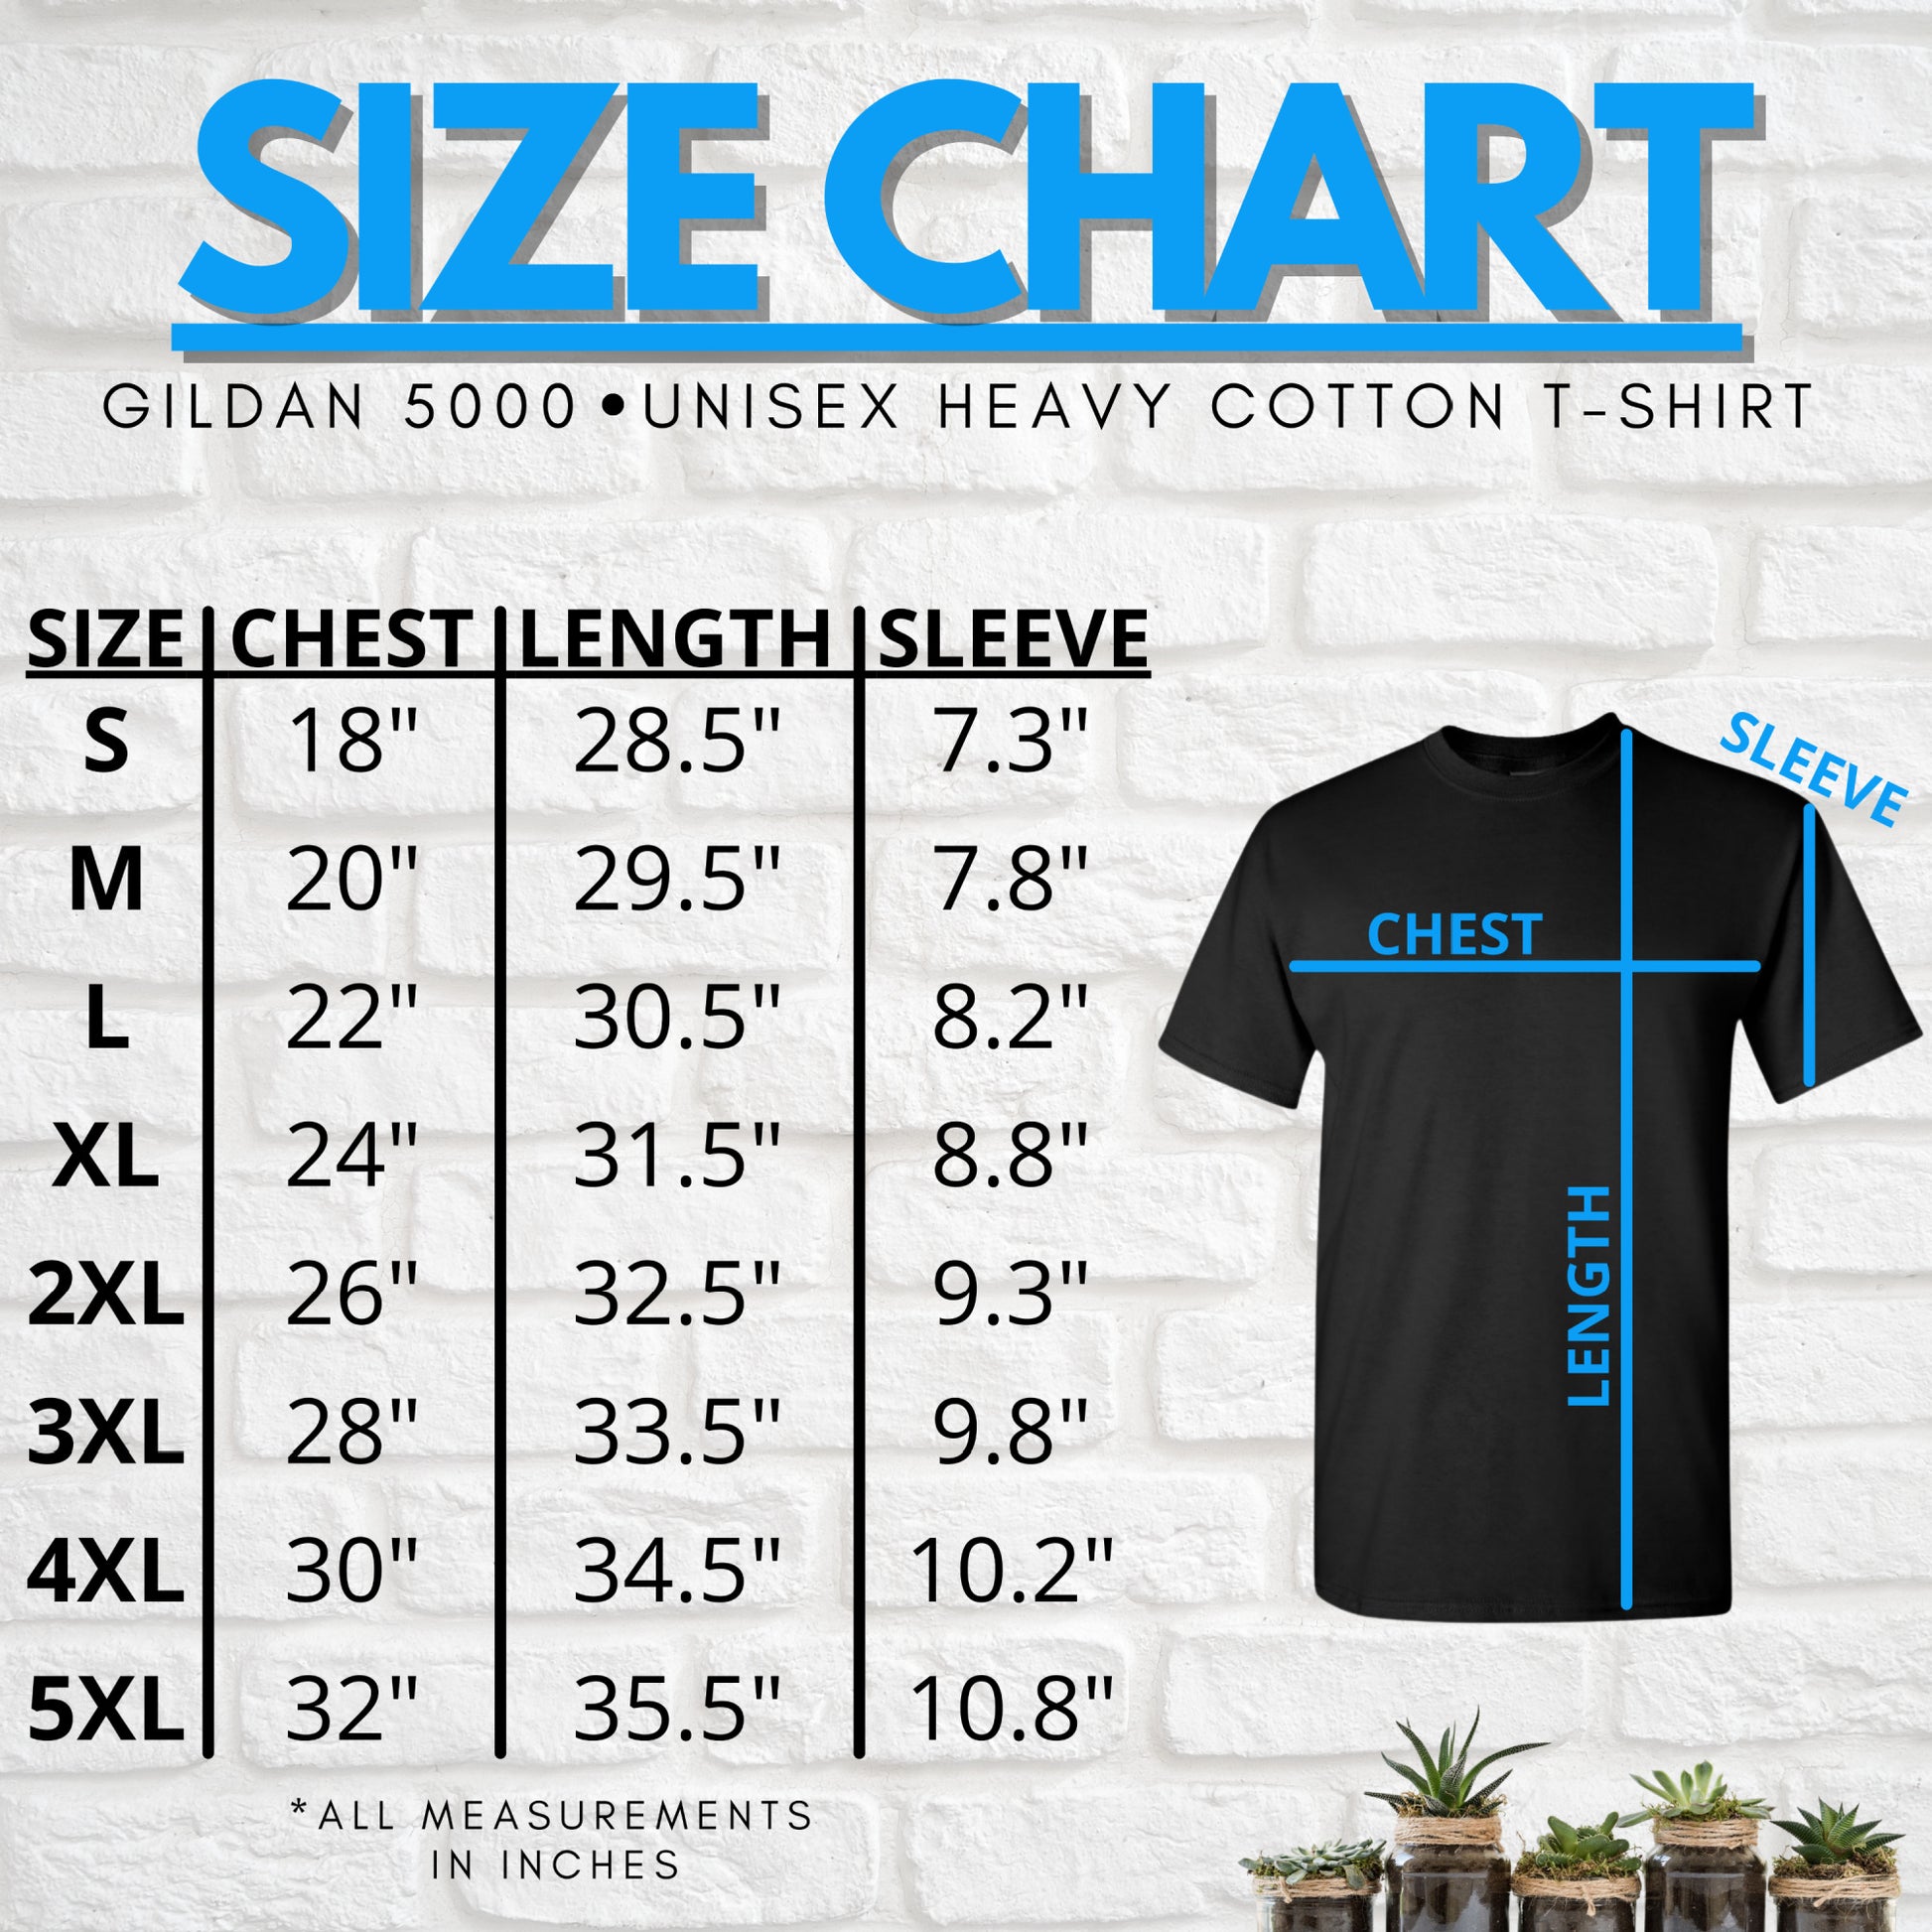 Size chart for this Gildan #5000 t-shirt